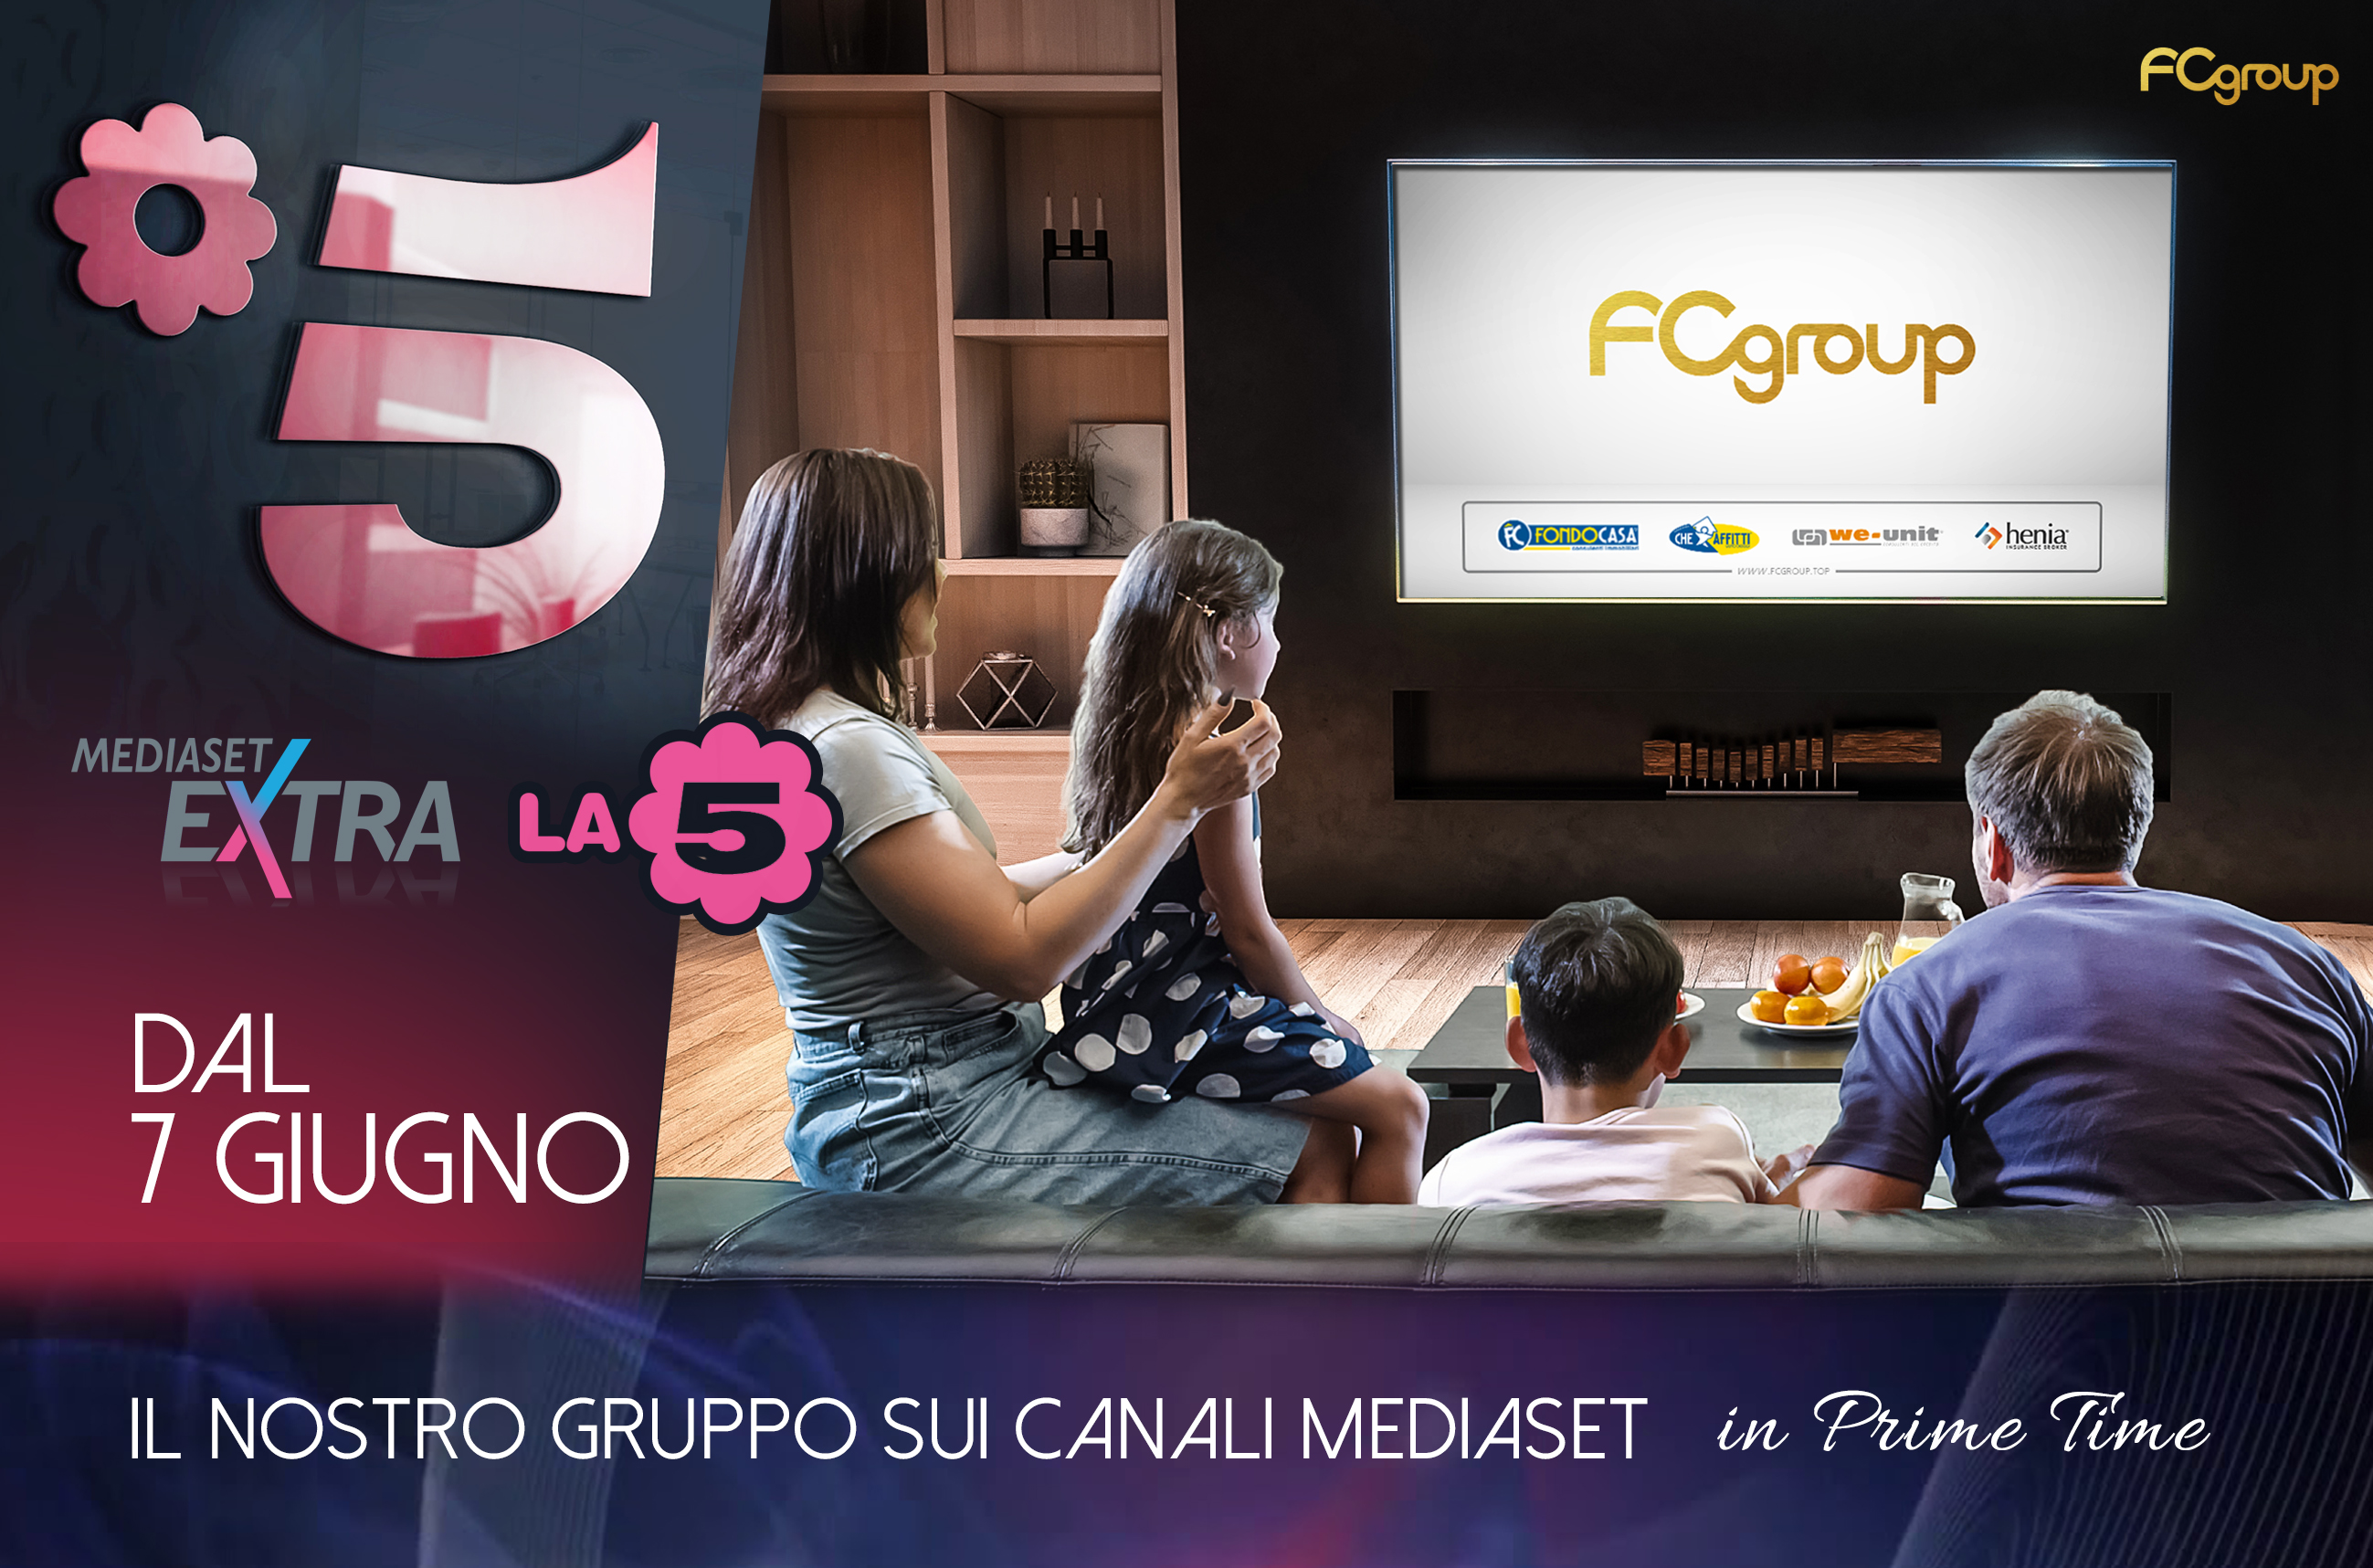 Fc group Mediaset